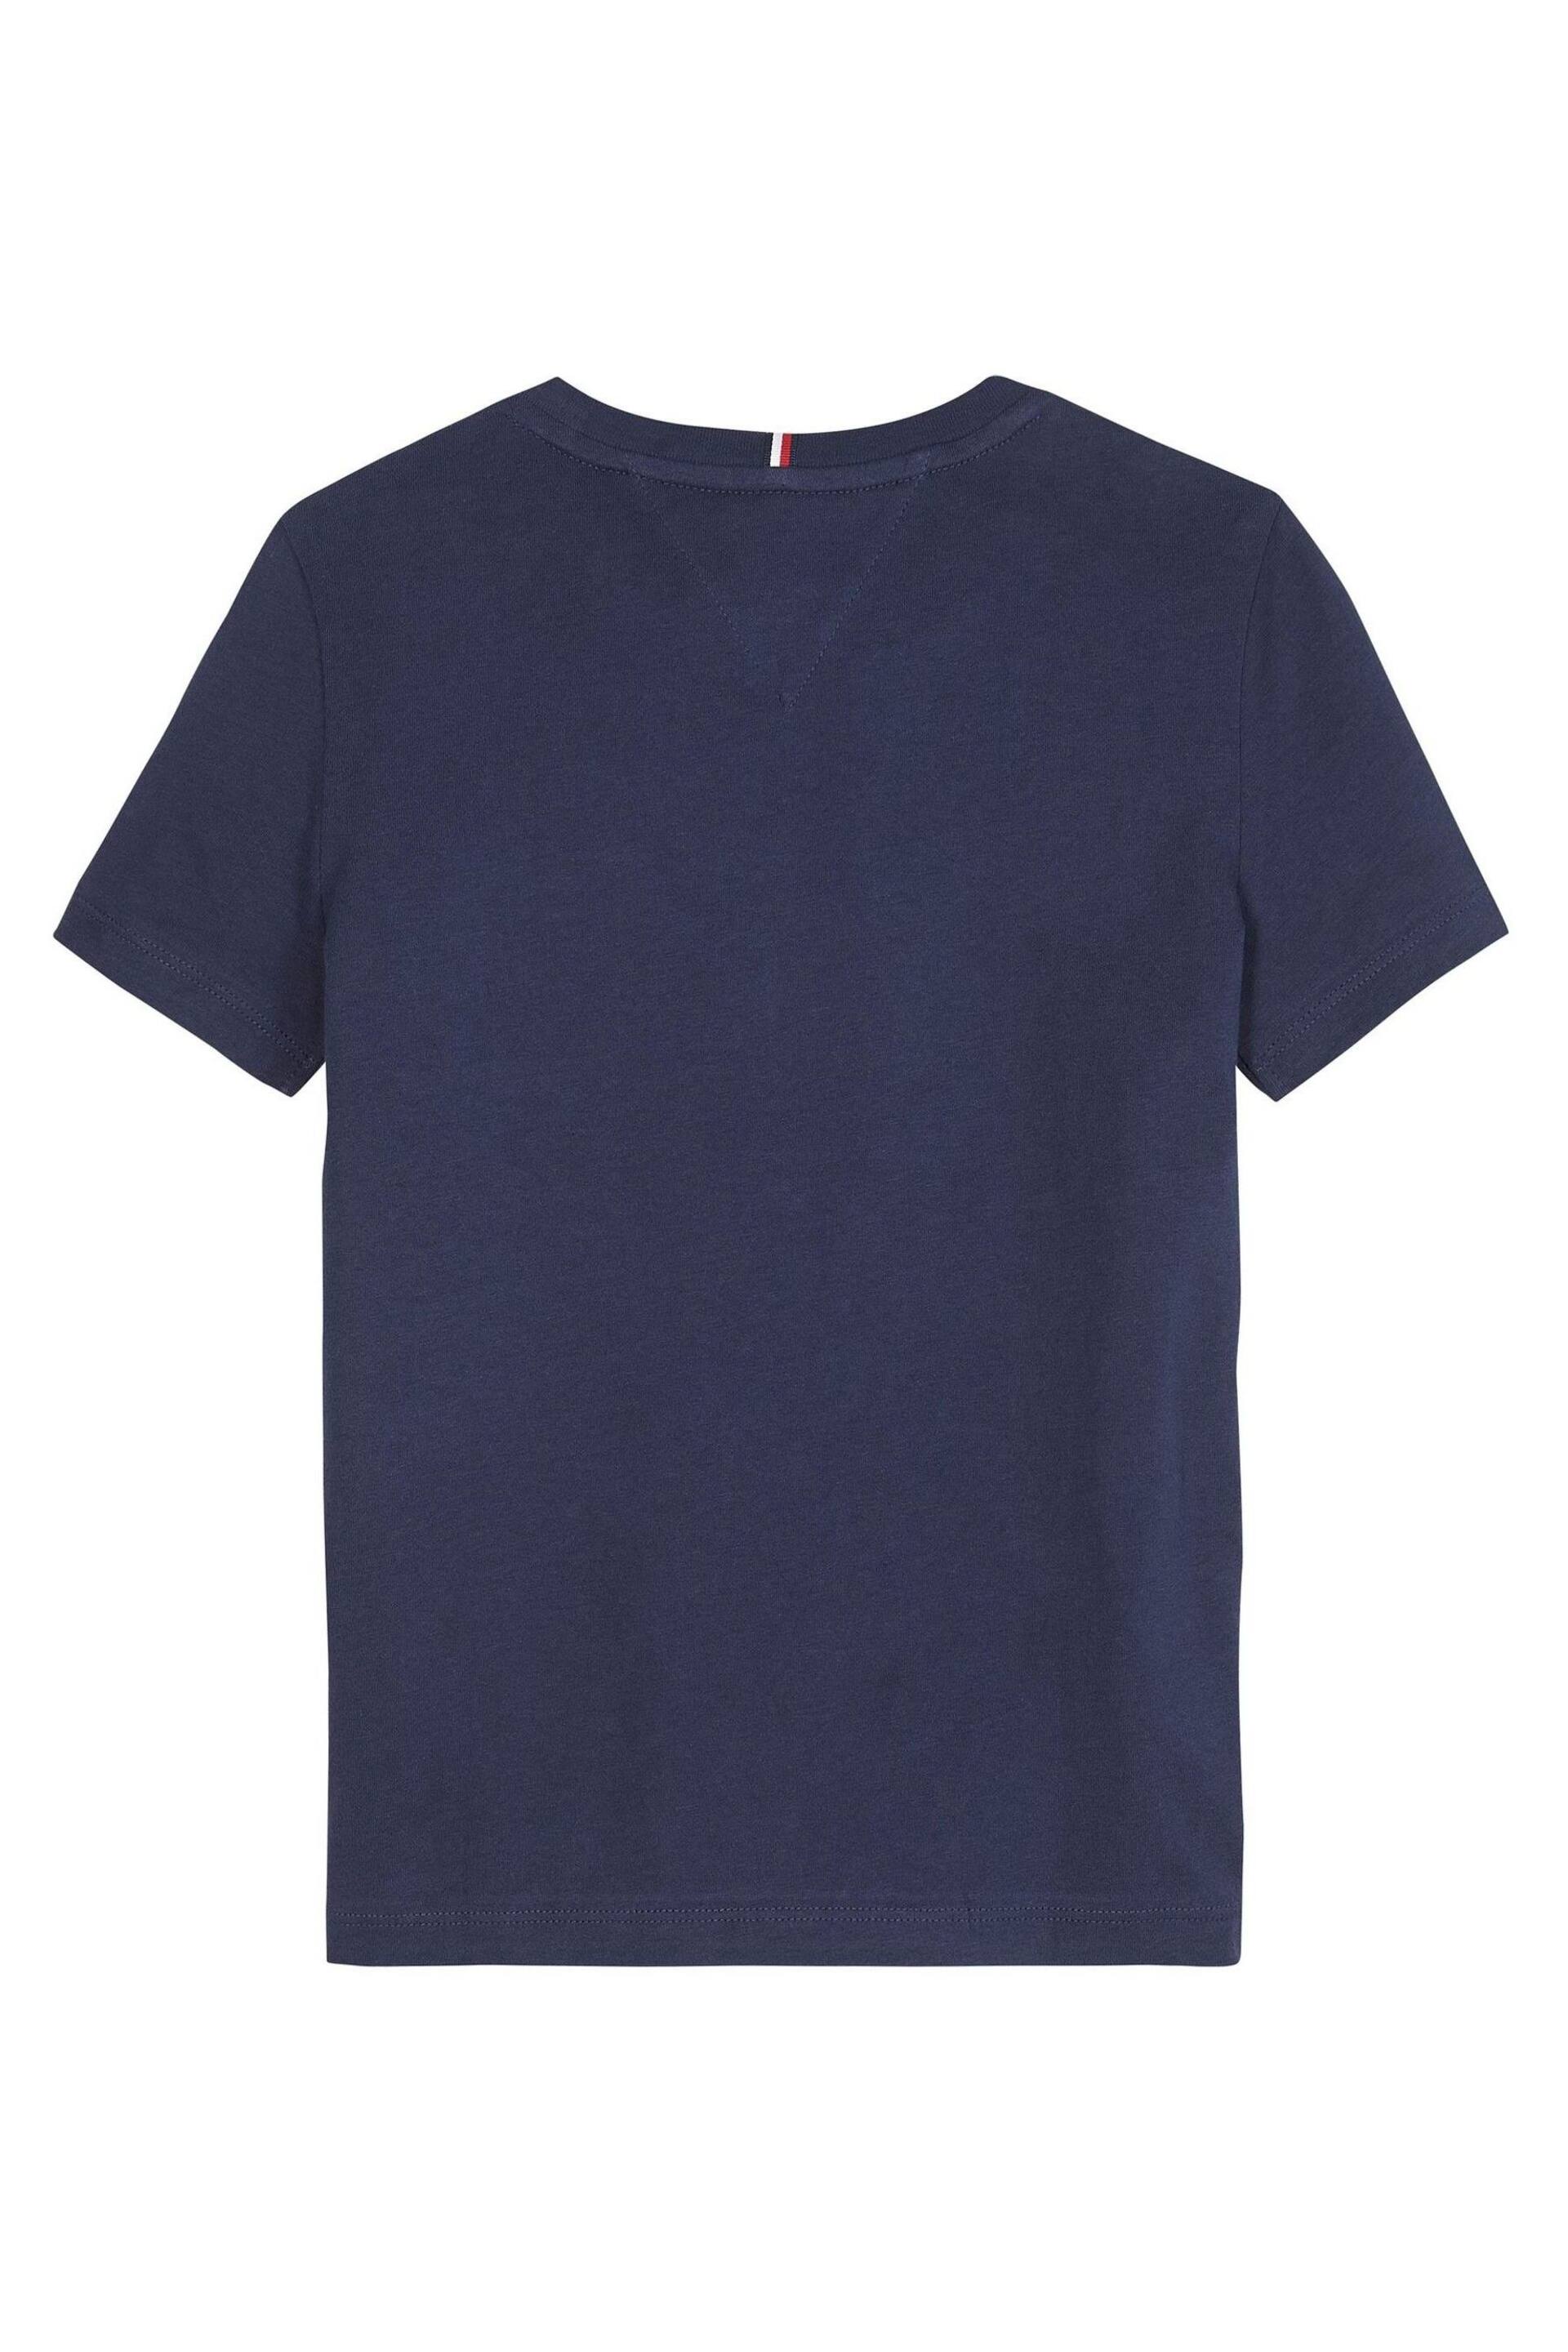 Tommy Hilfiger Blue Essential T-Shirt - Image 2 of 2